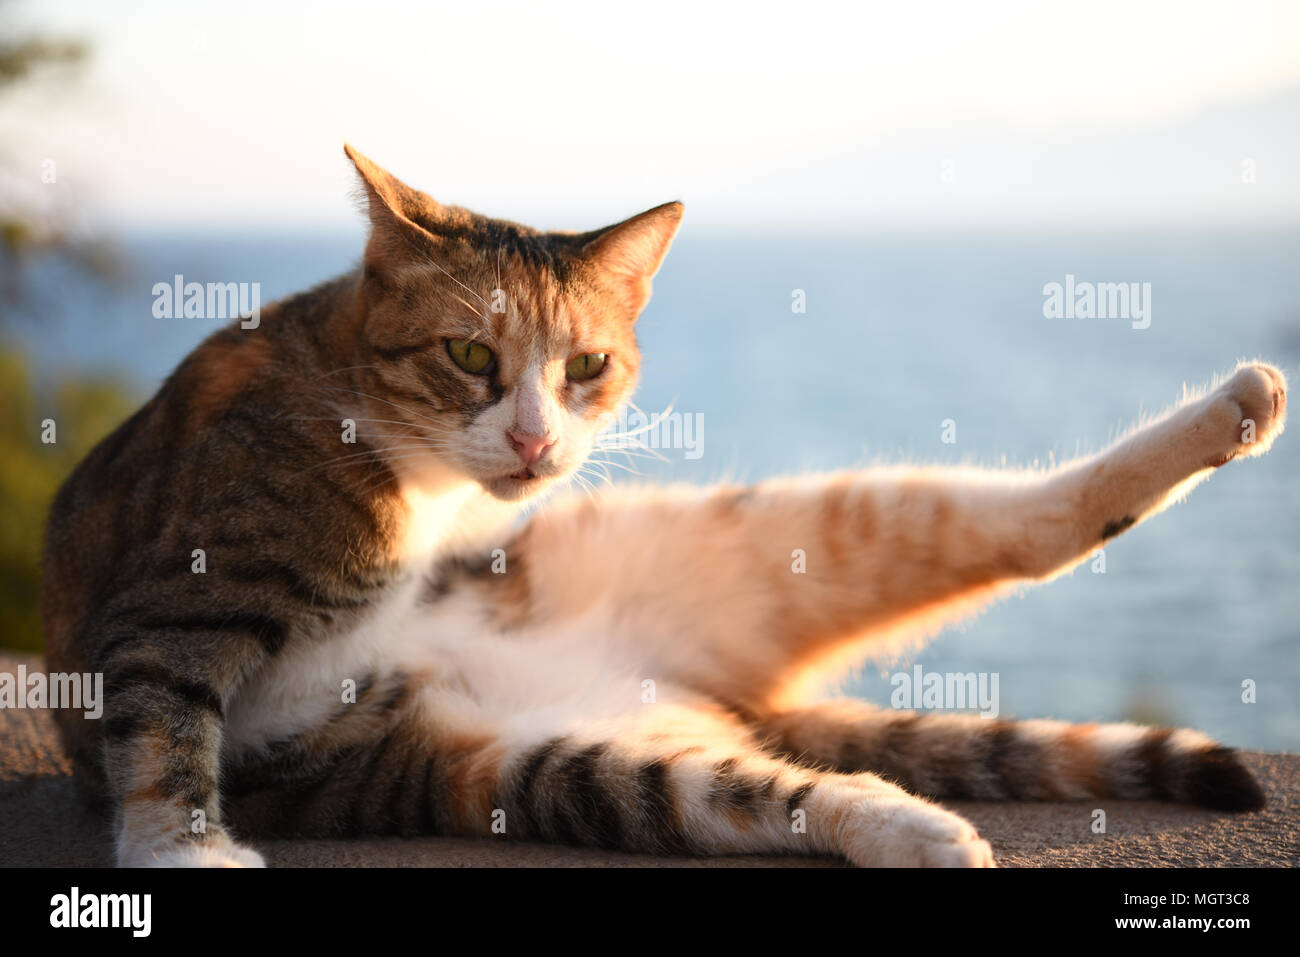 Cute cat grooming himself outdoors Stock Photo